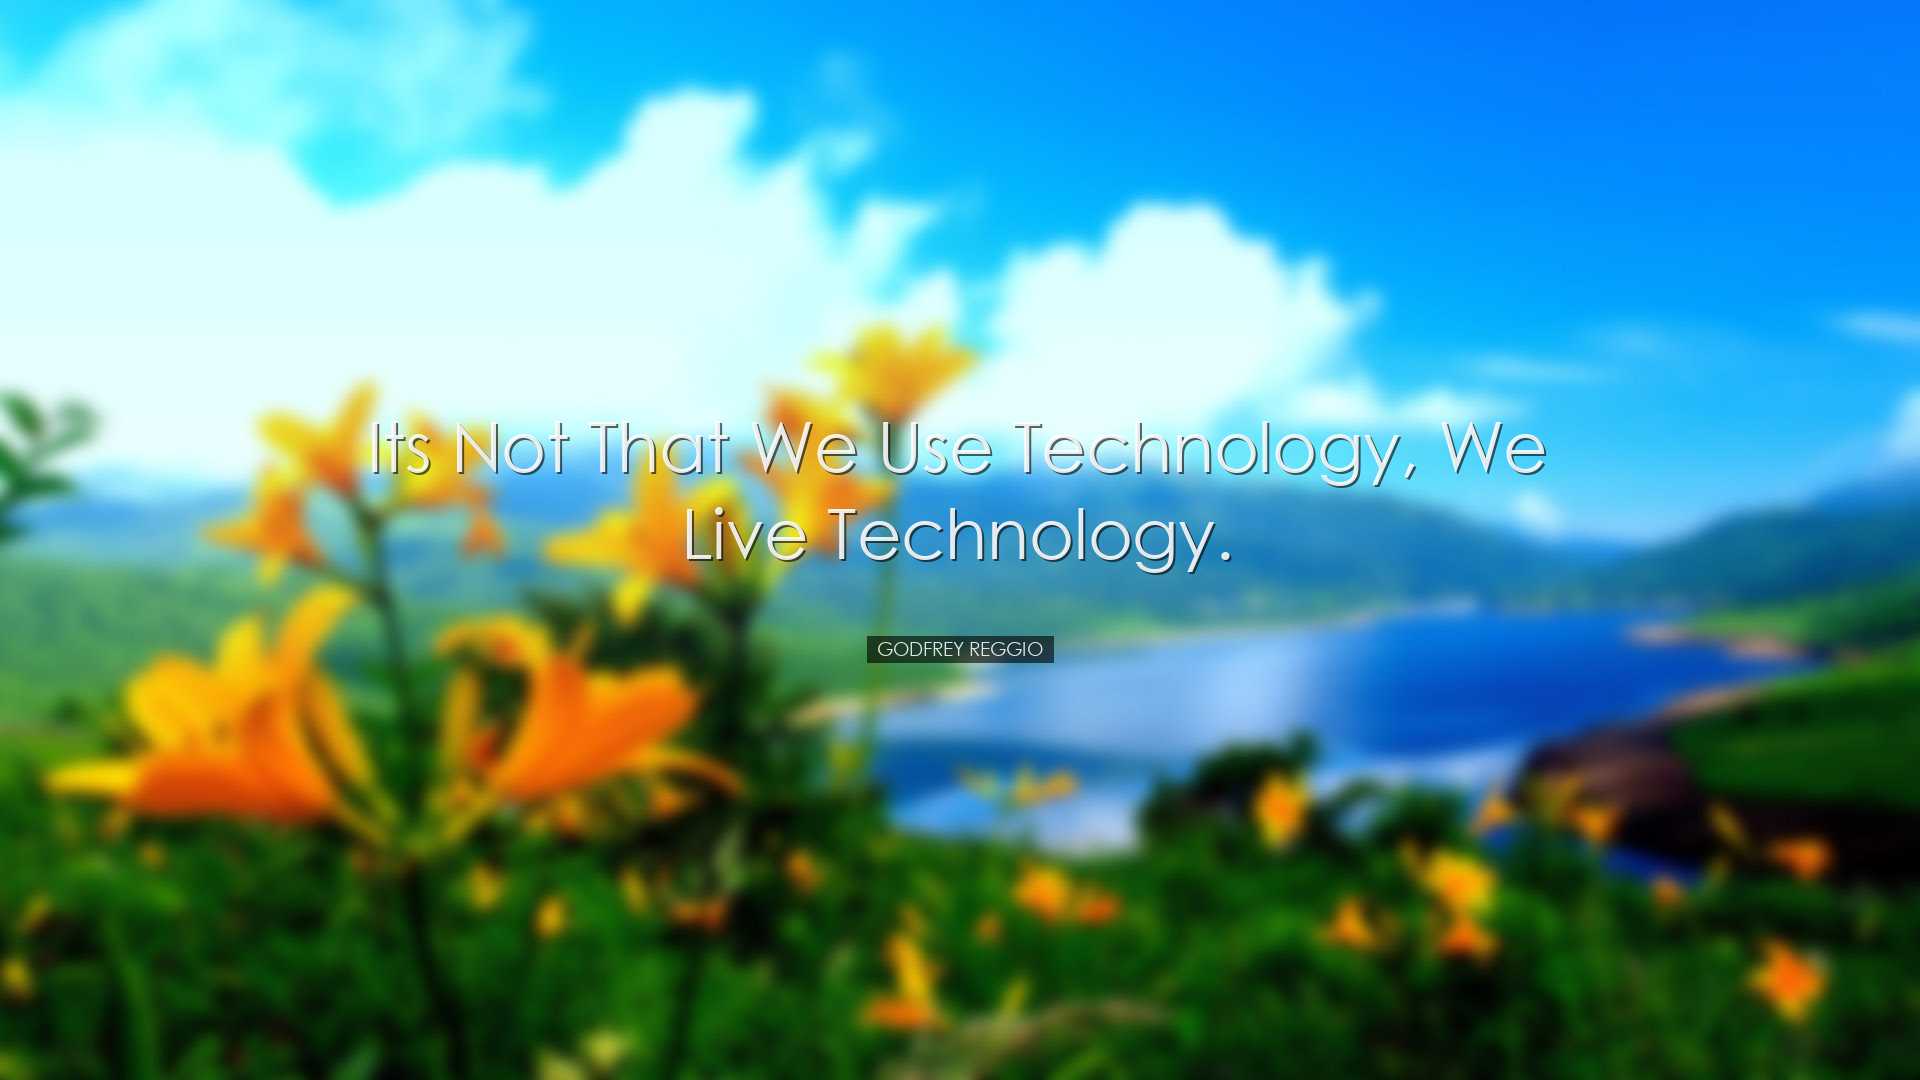 Its not that we use technology, we live technology. - Godfrey Regg